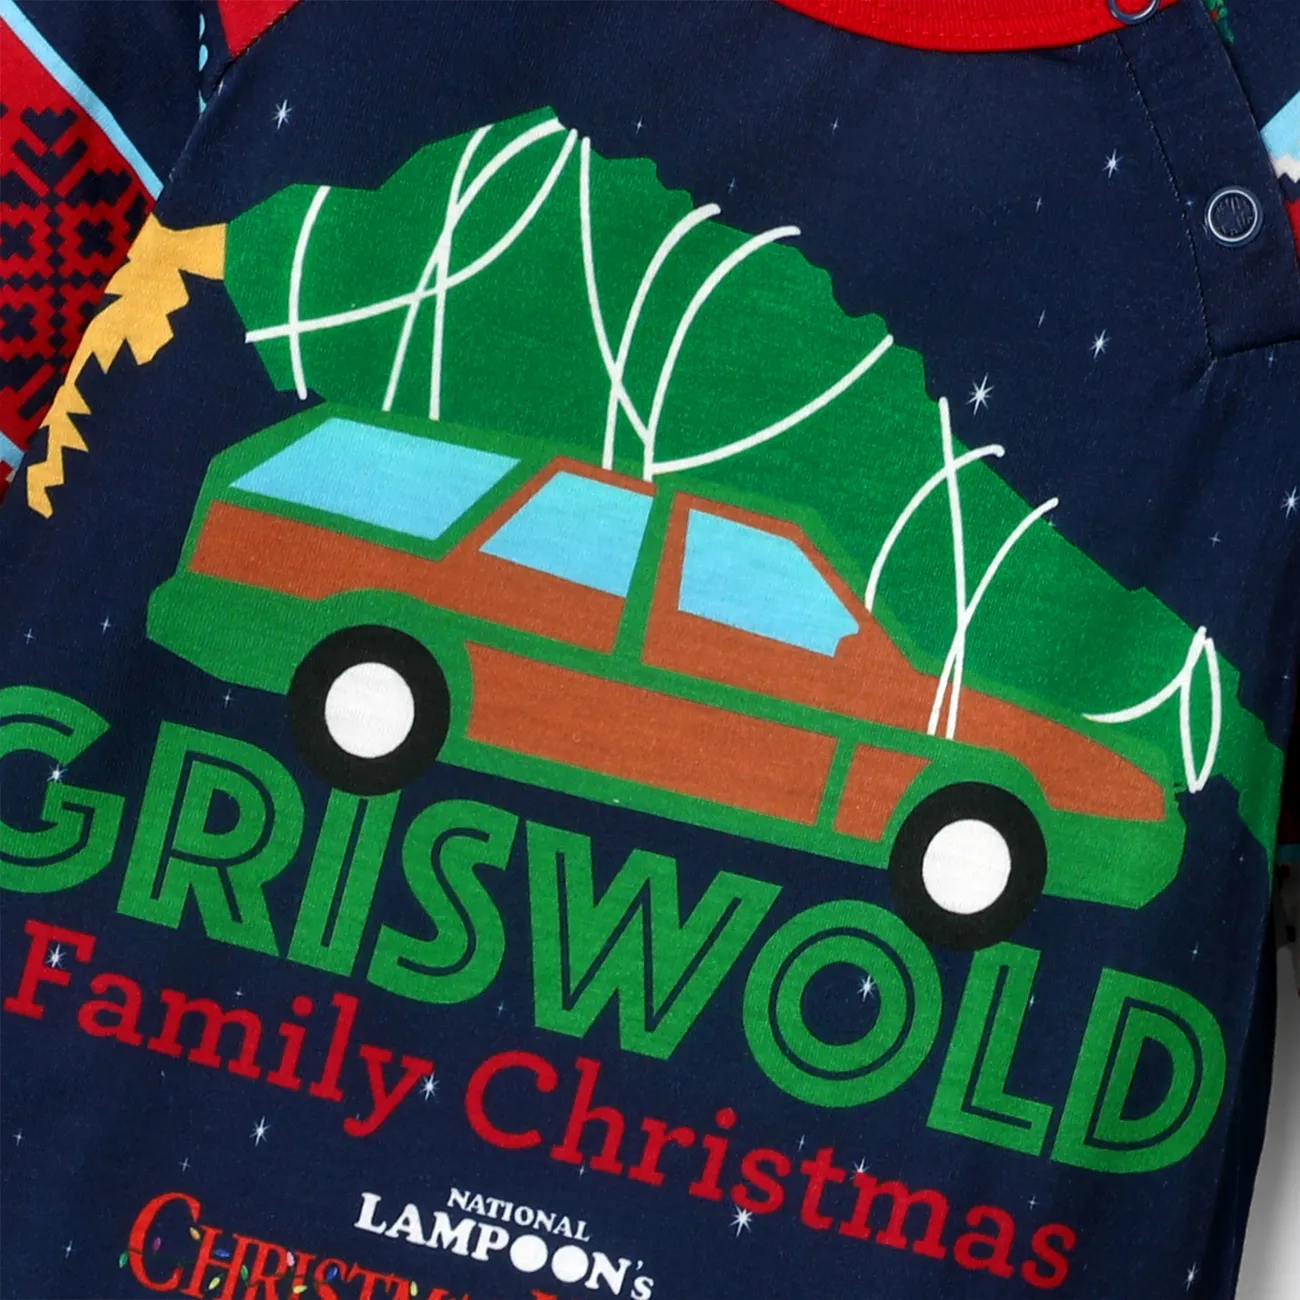 Christmas Vacation Natal Look de família Manga comprida Conjuntos de roupa para a família Pijamas (Flame Resistant) Multicolorido big image 1